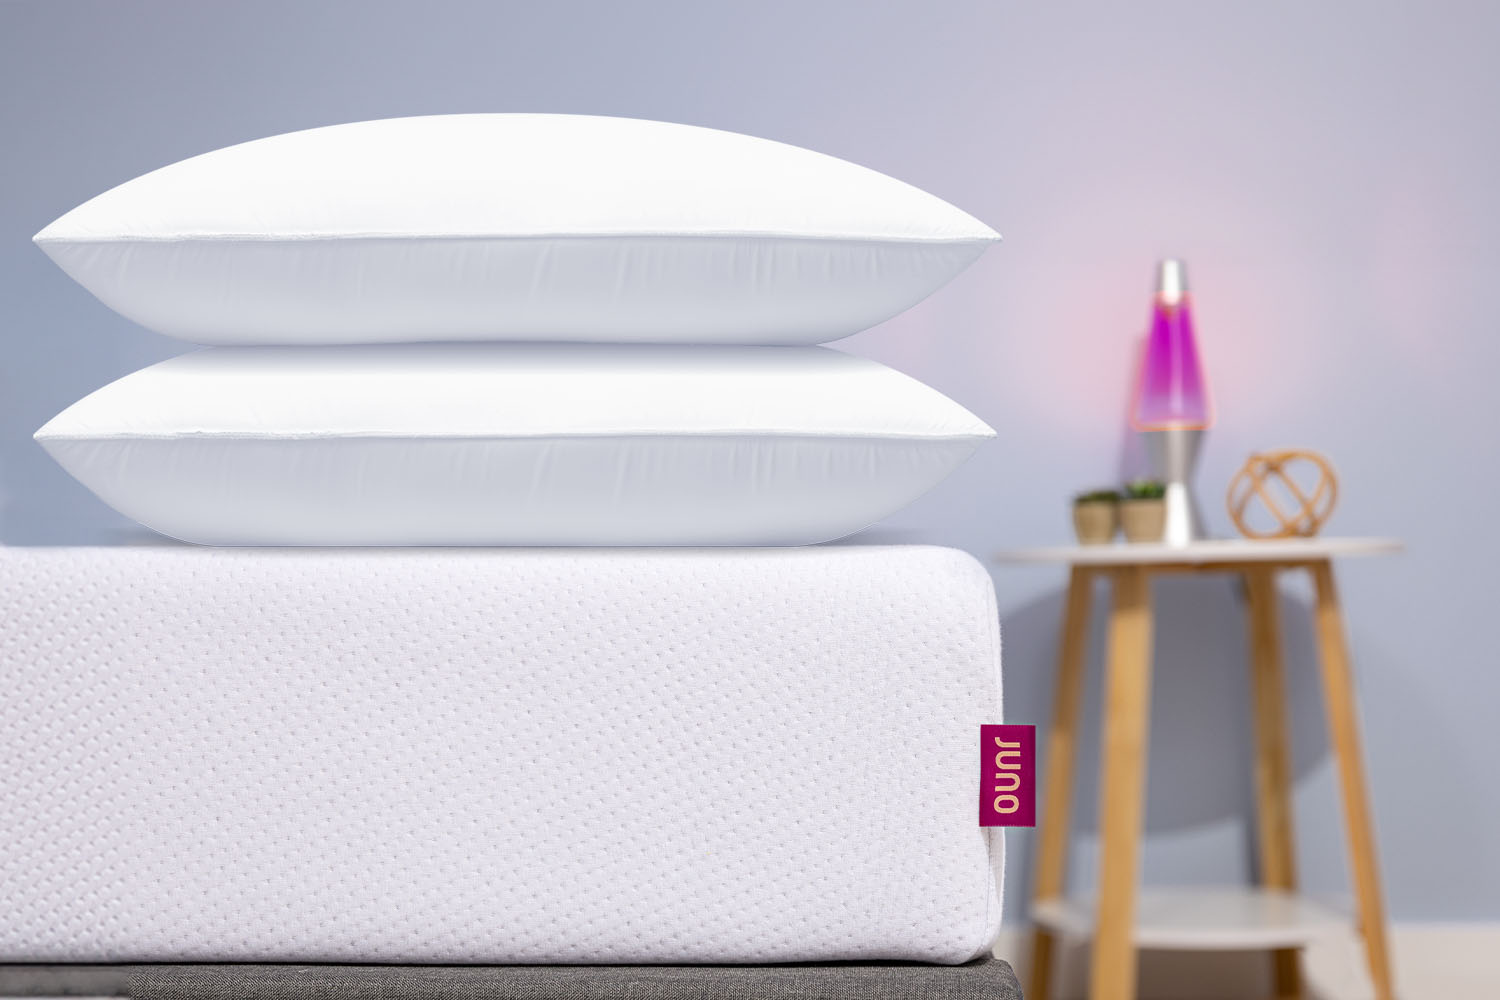 Two Memory Foam Pillows on a Juno mattress